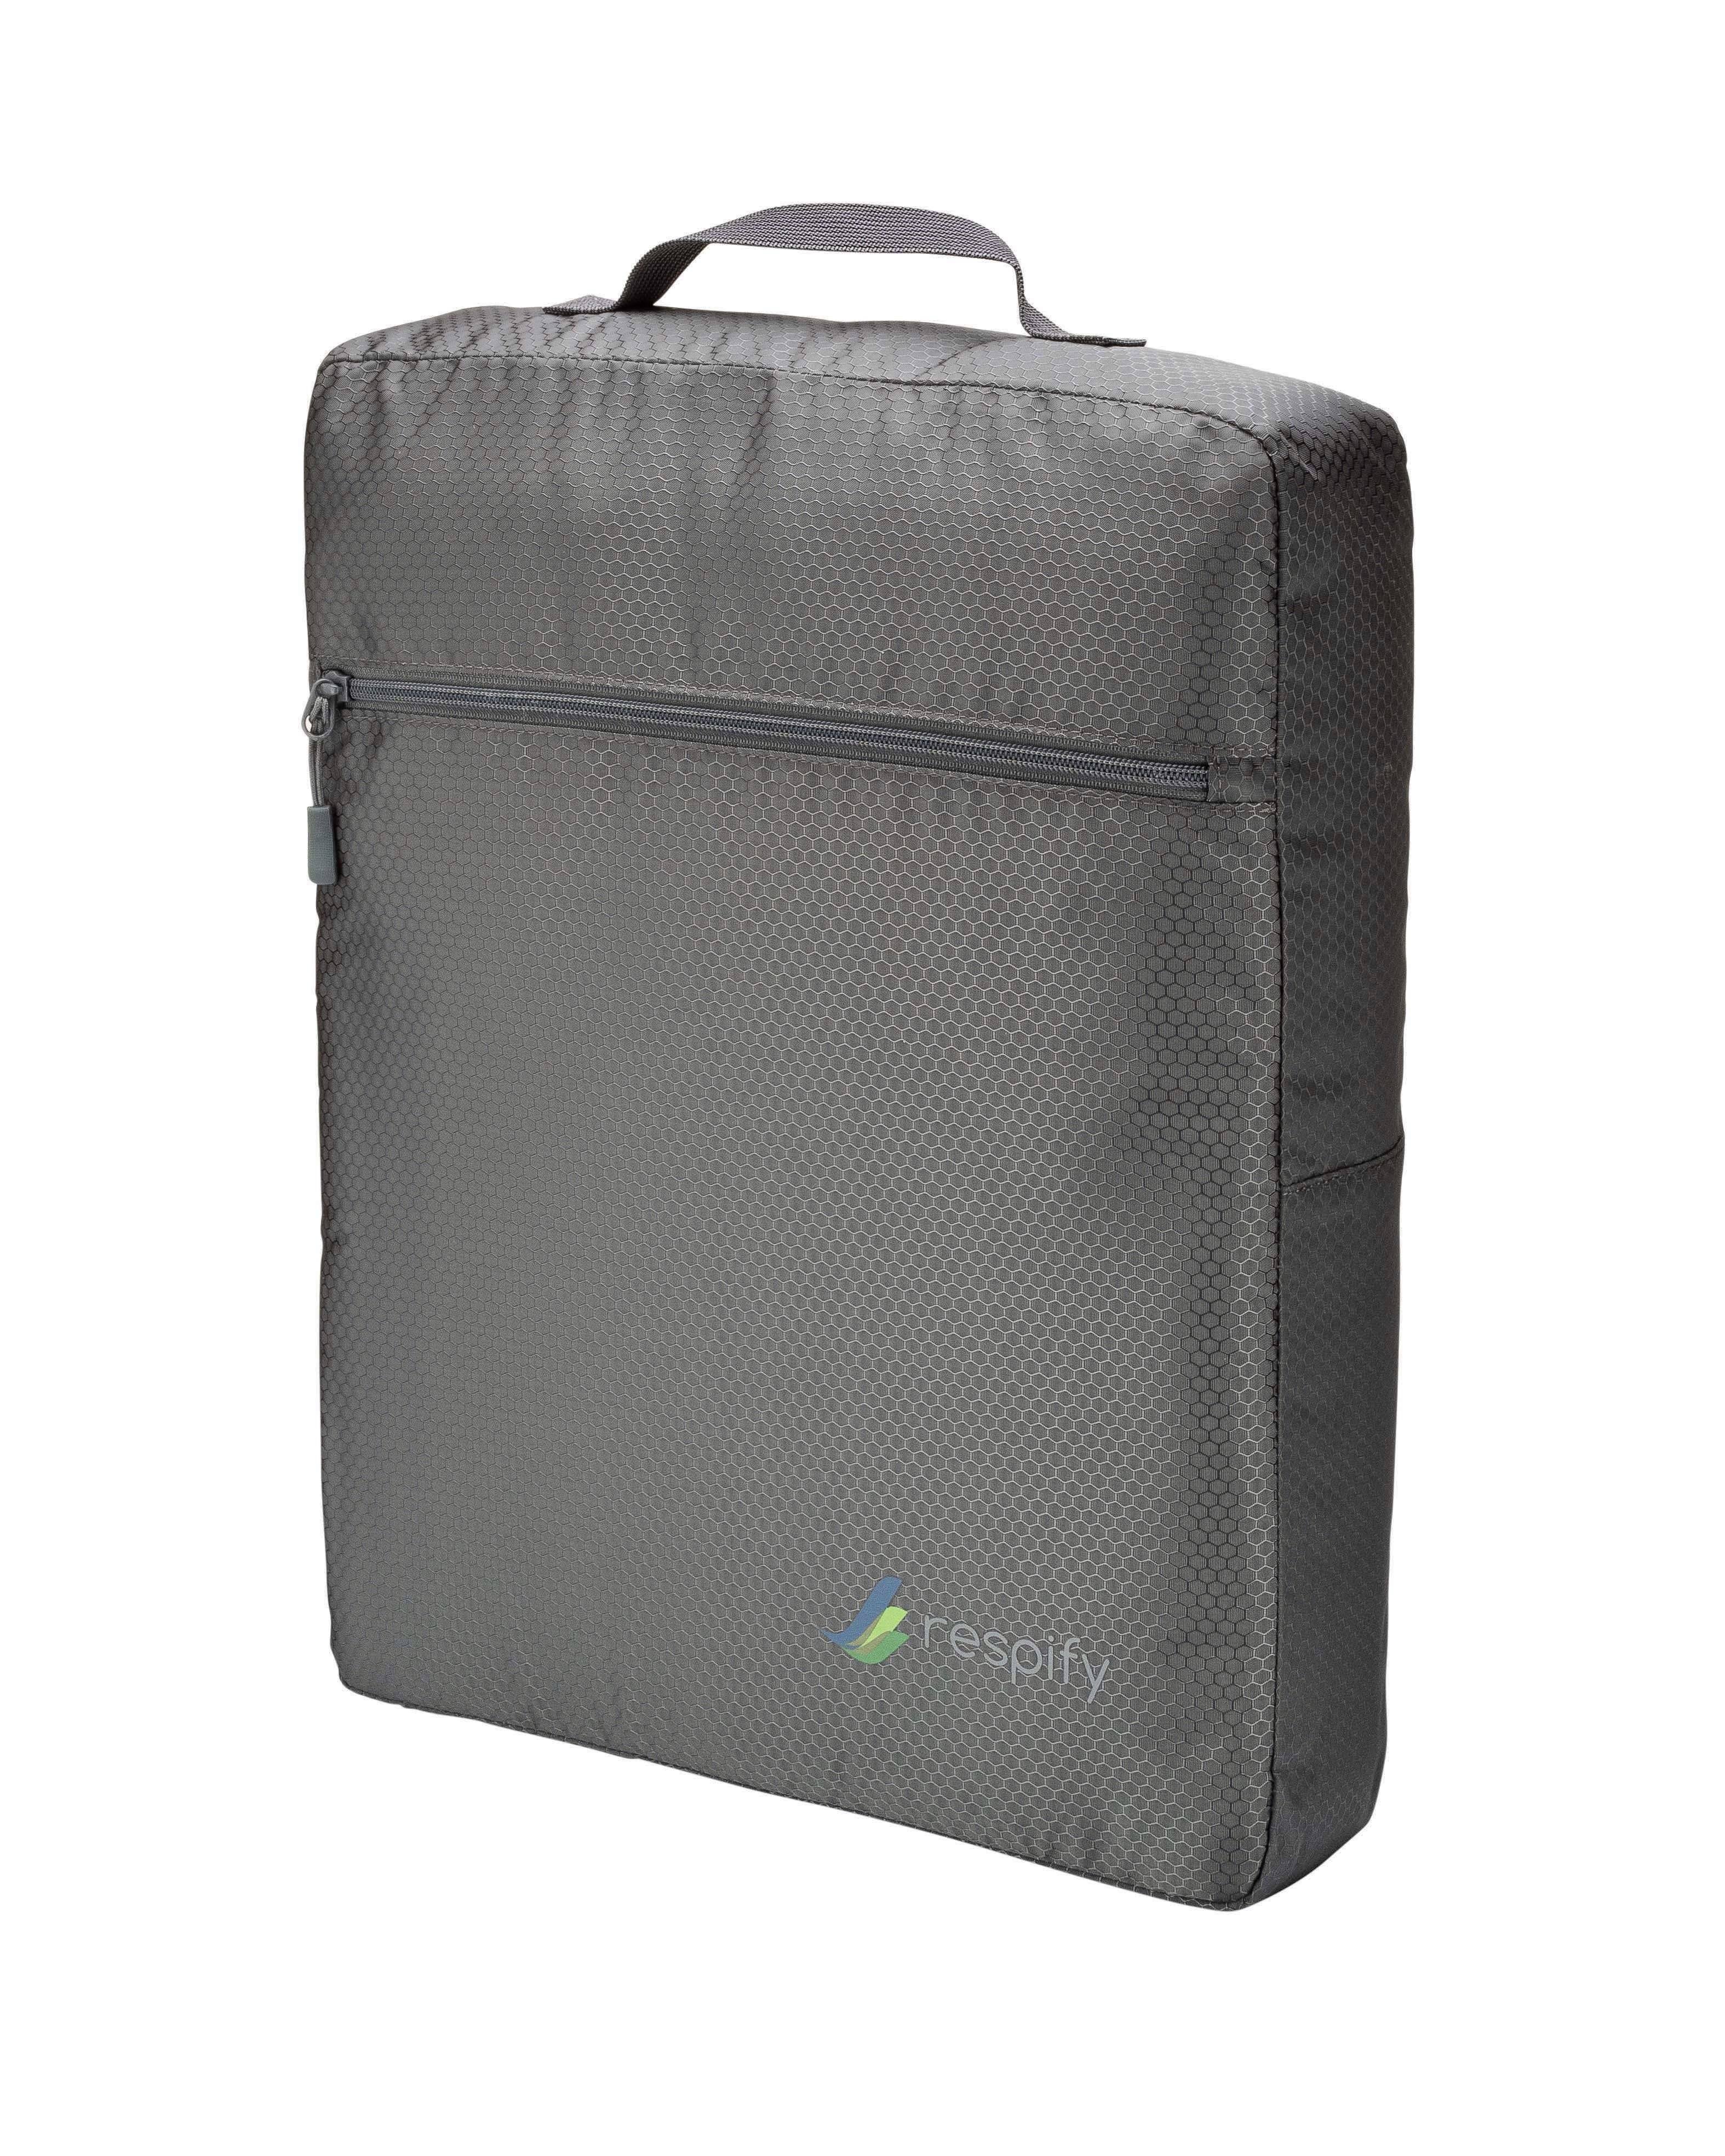 Respify™ Zip-It Bag Respify GRAY 